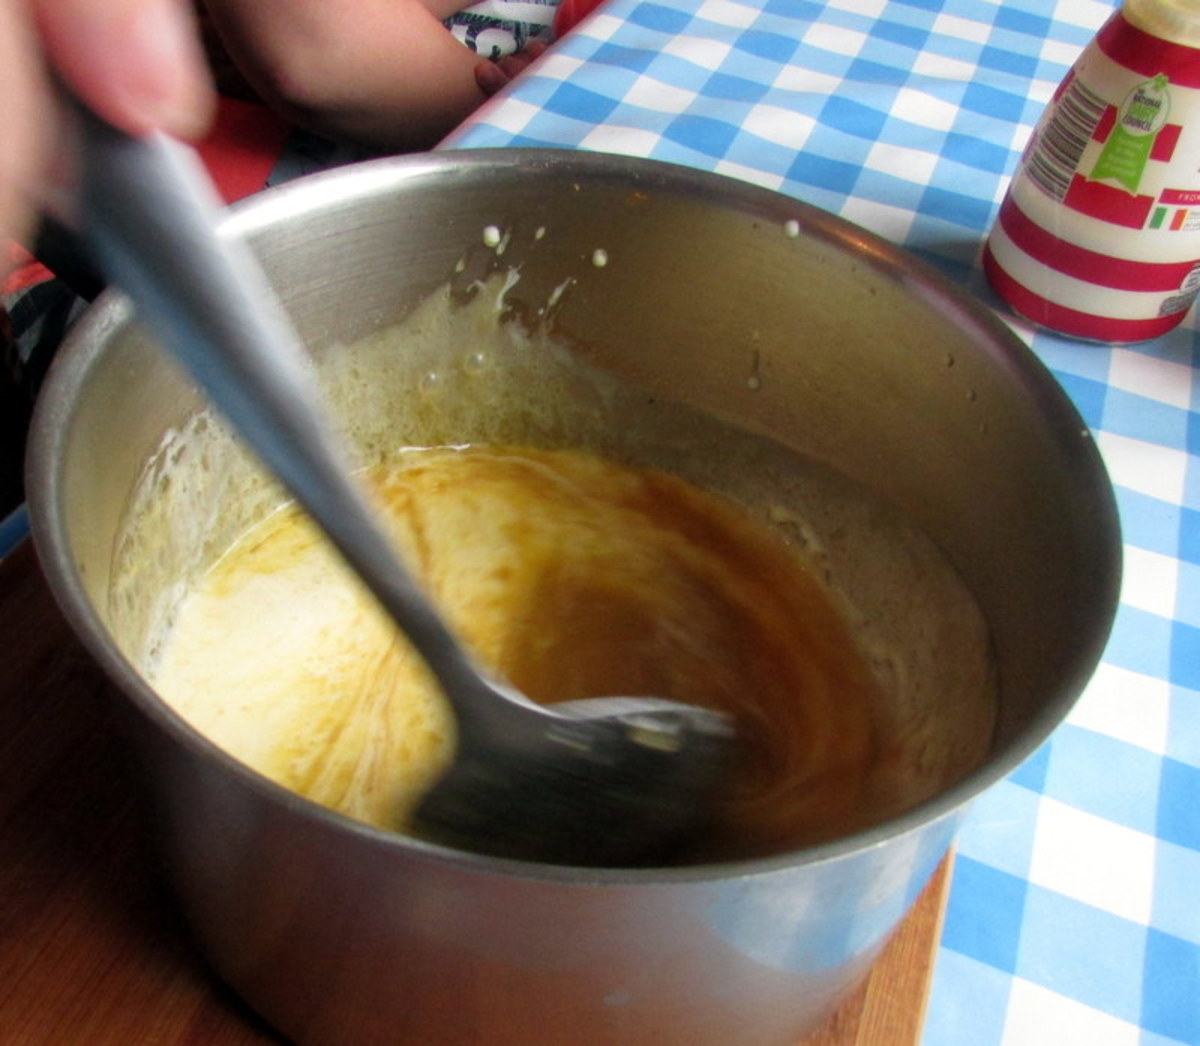 Stir in the cream slowly.